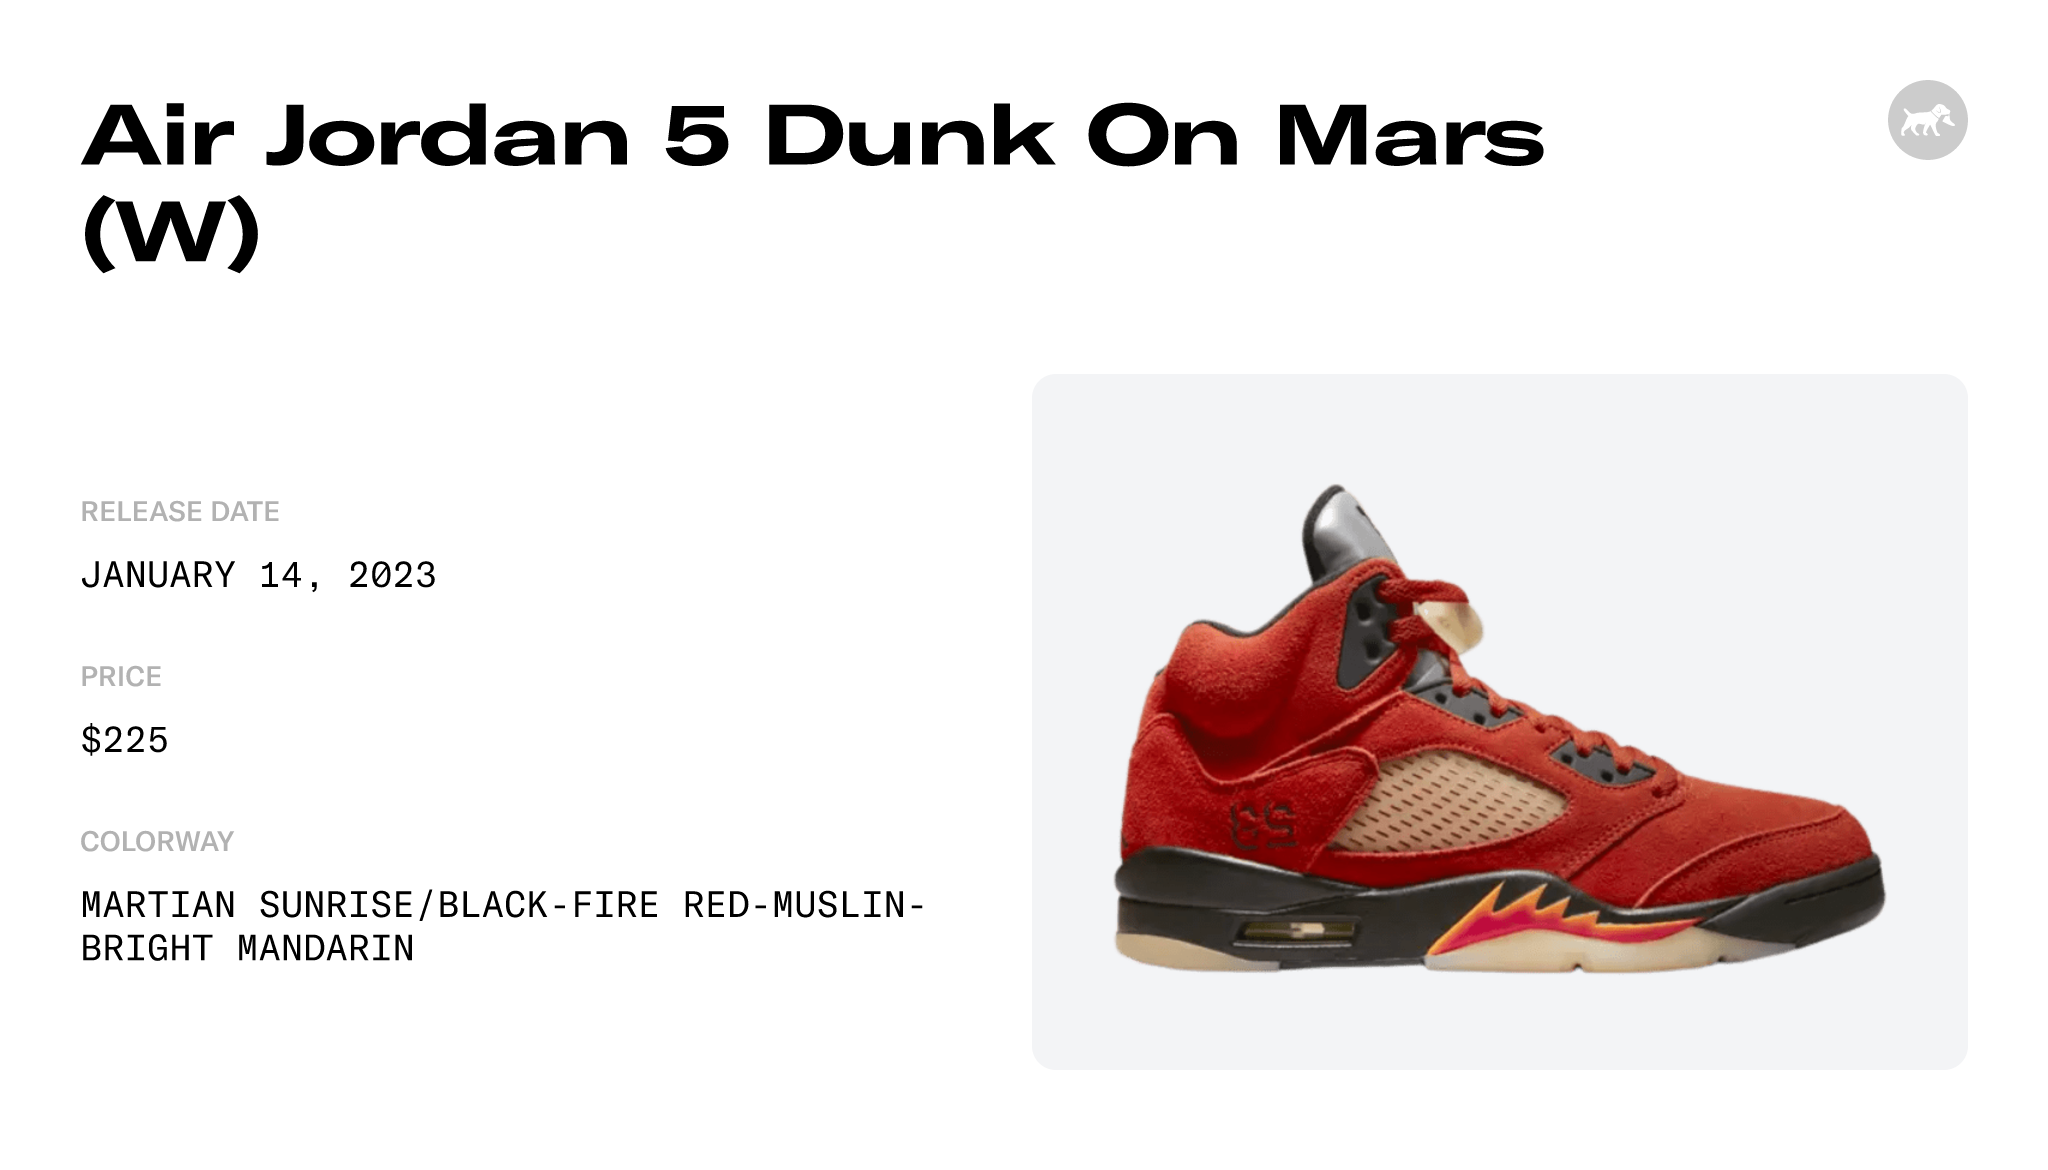 Air Jordan 5 Retro Dunk on Mars